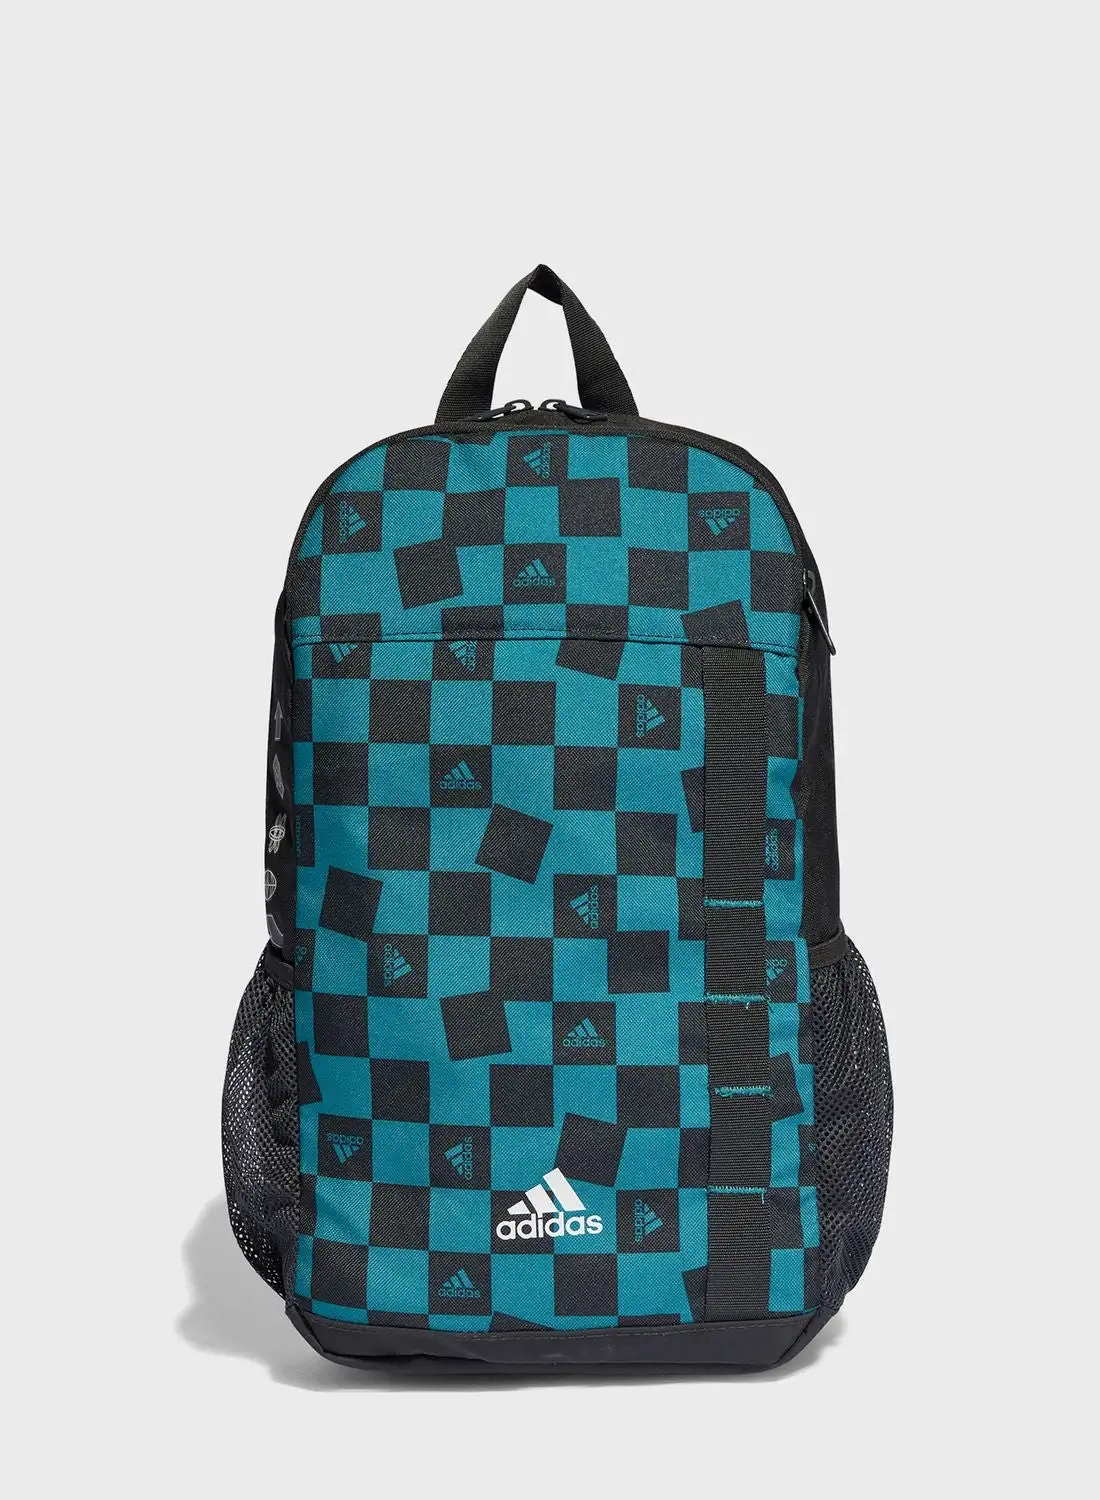 Adidas Arkd3 Backpack